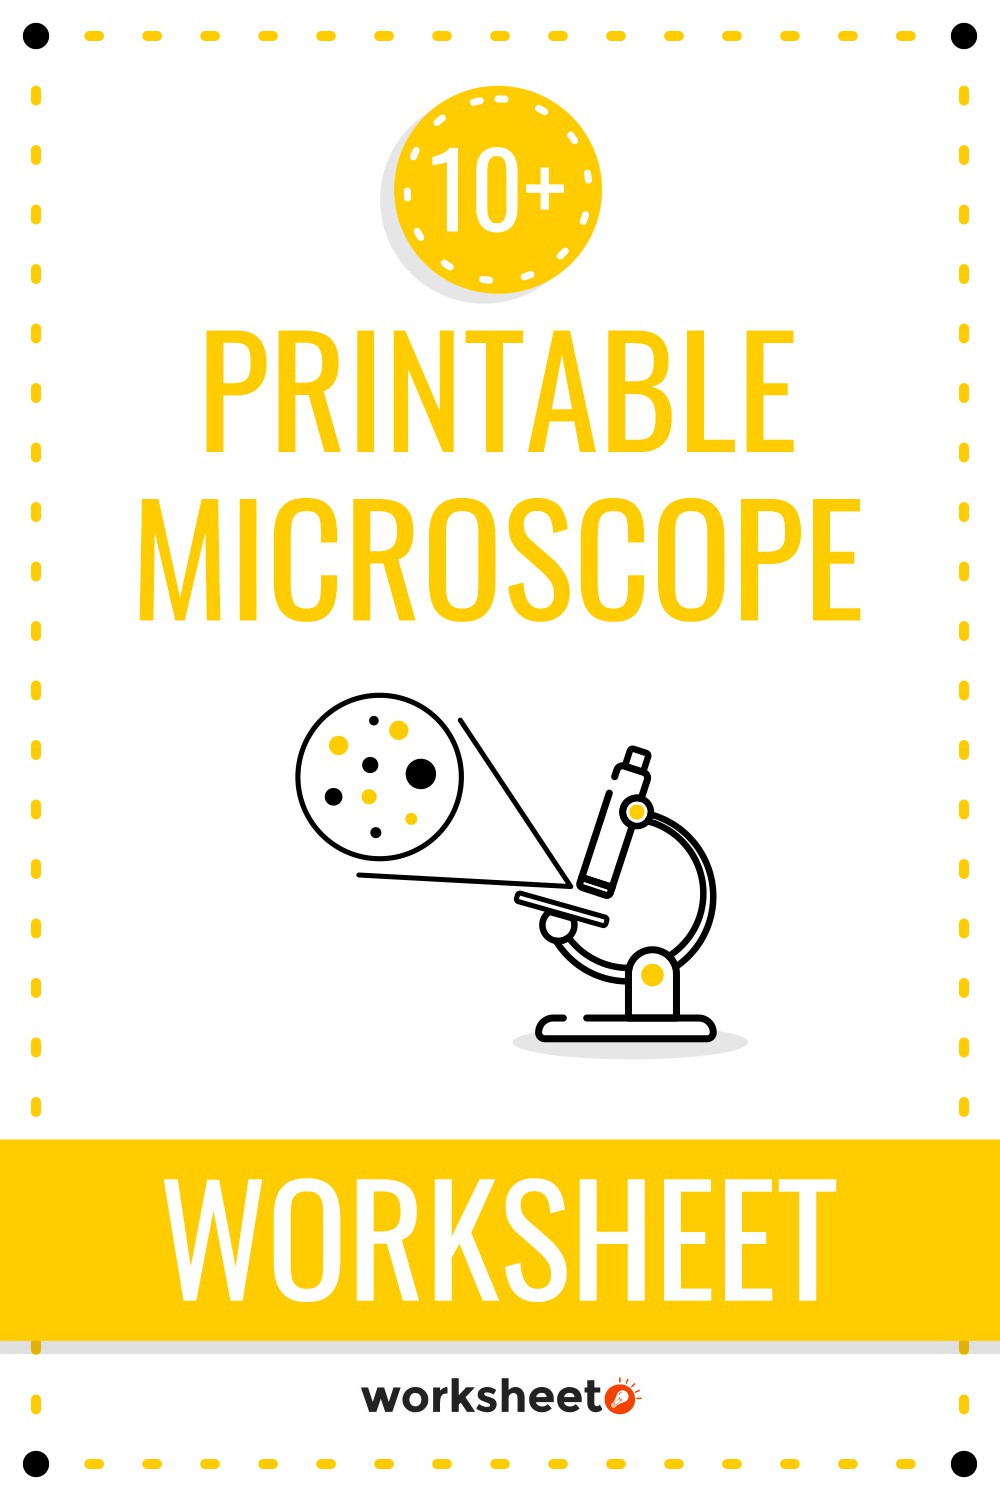 15 Images of Printable Microscope Worksheet